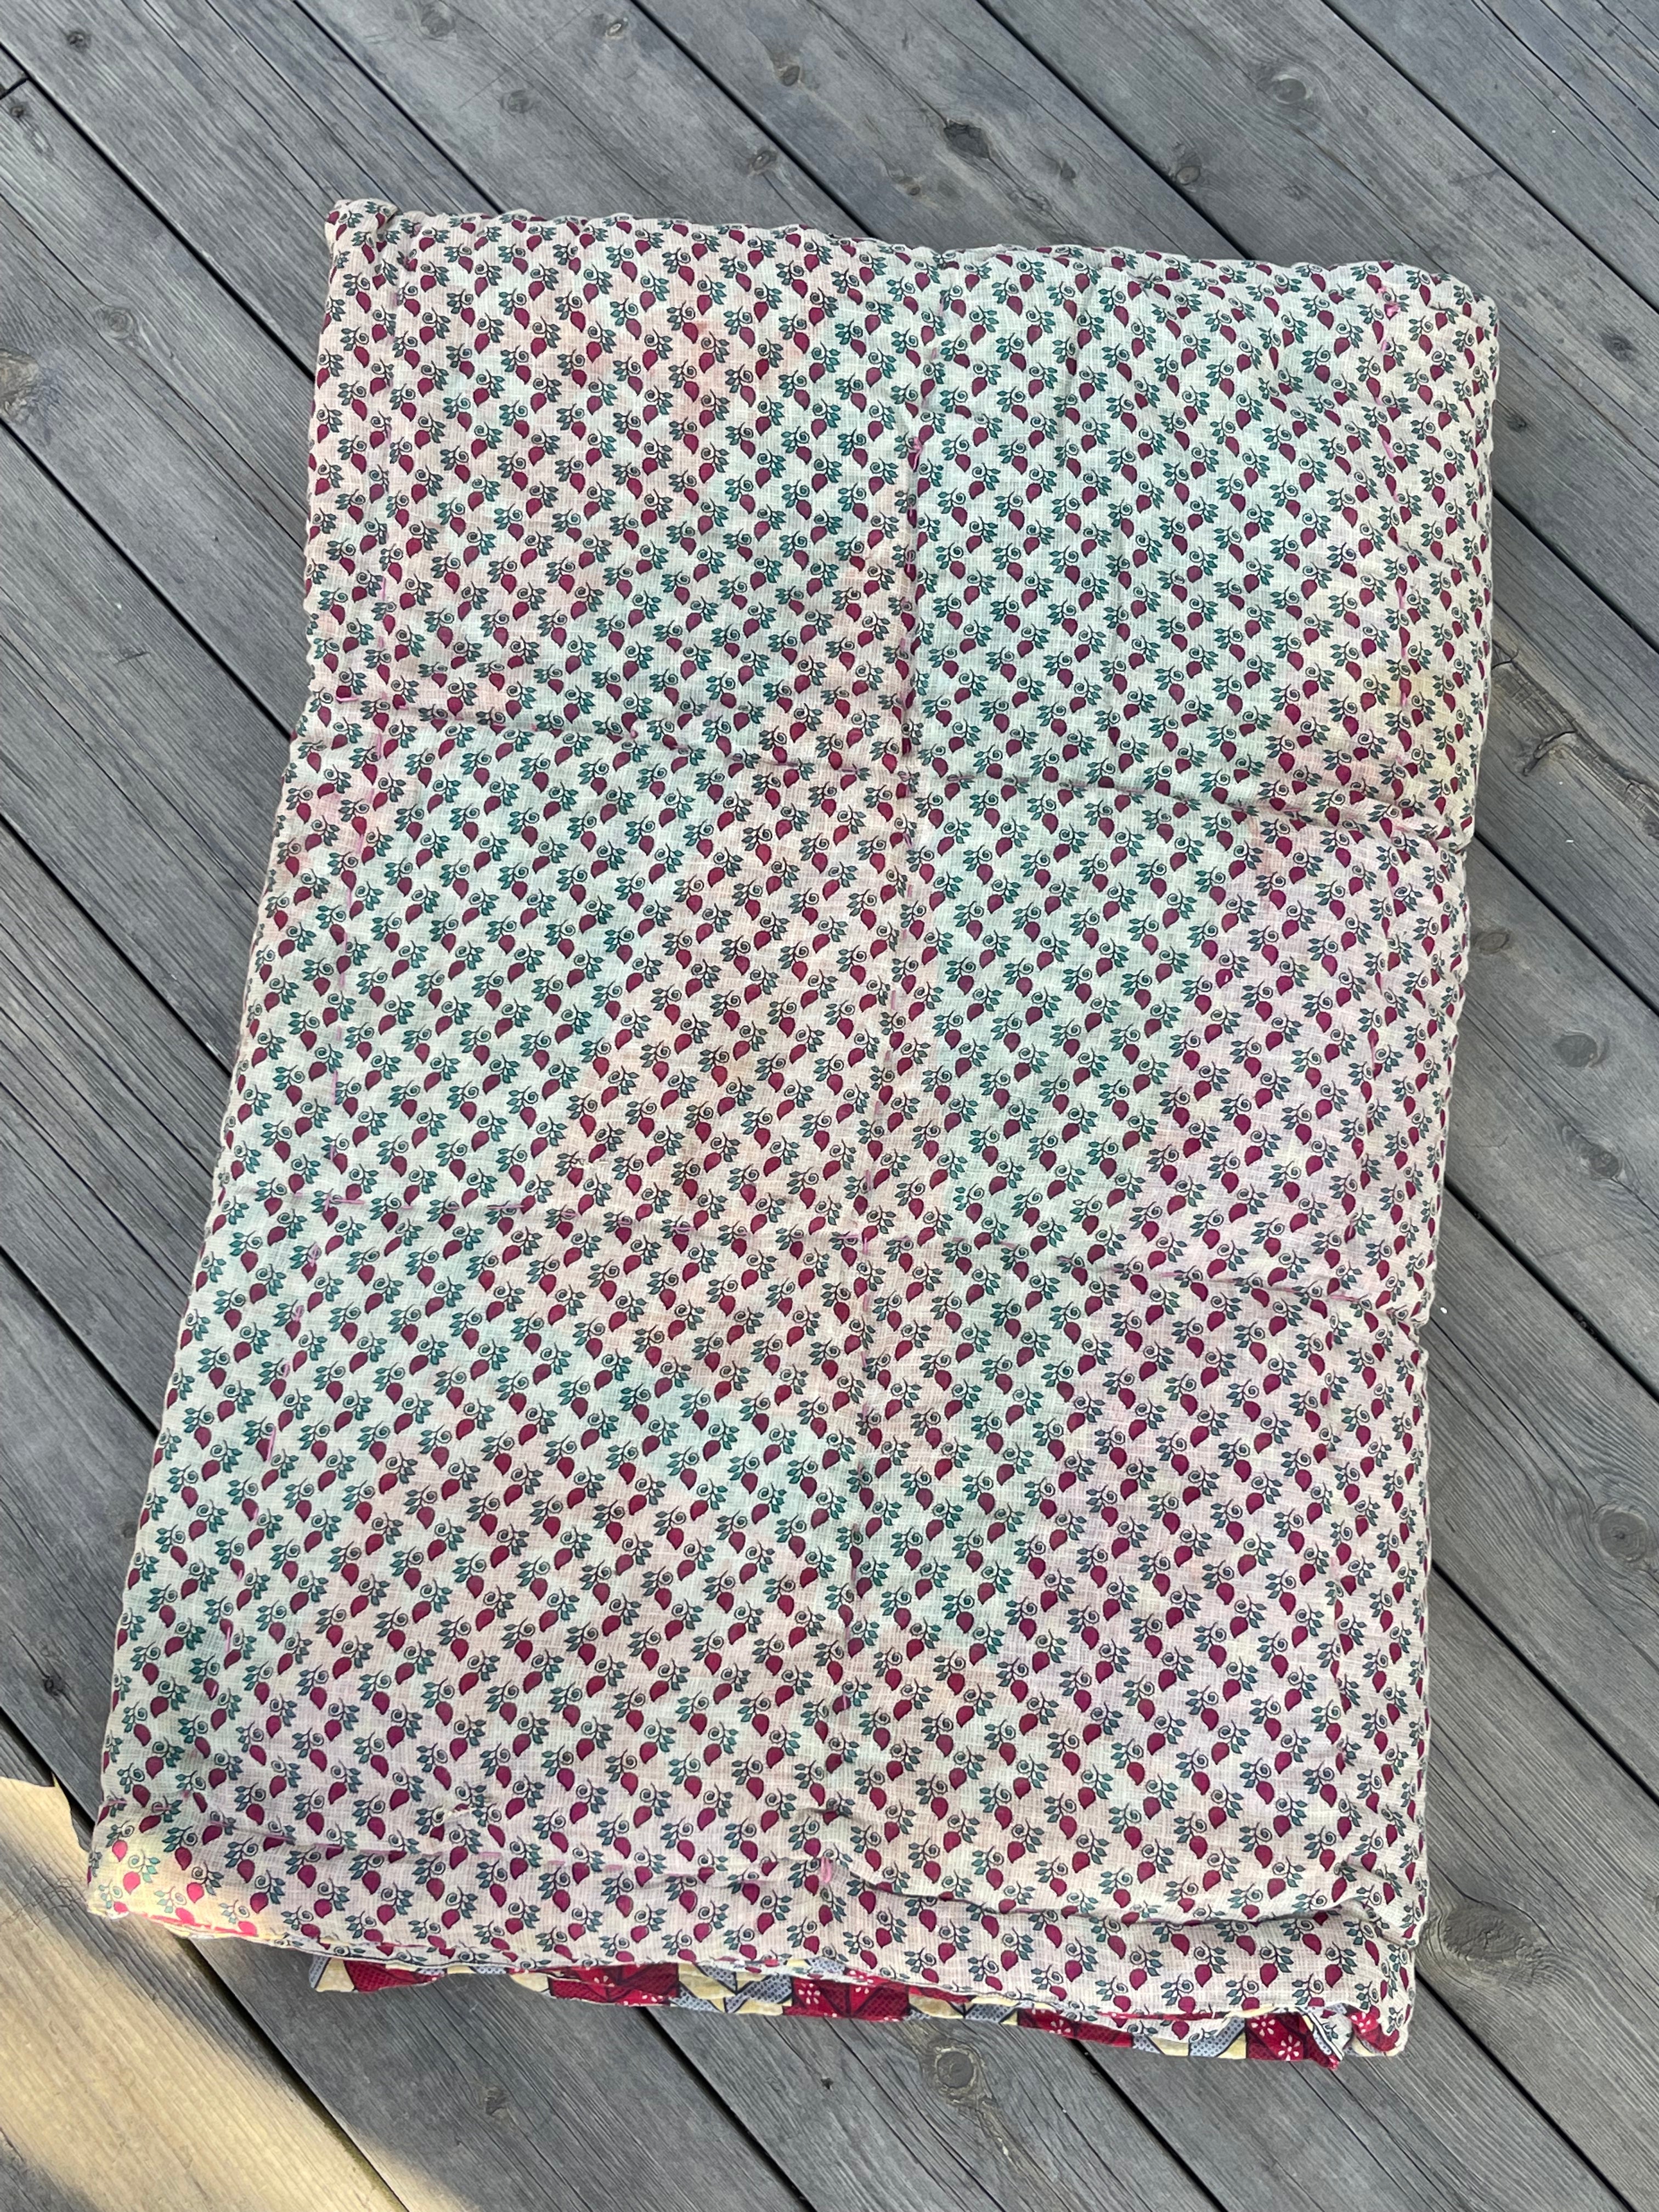 Vatteppe - Vintage Sari - QA32388